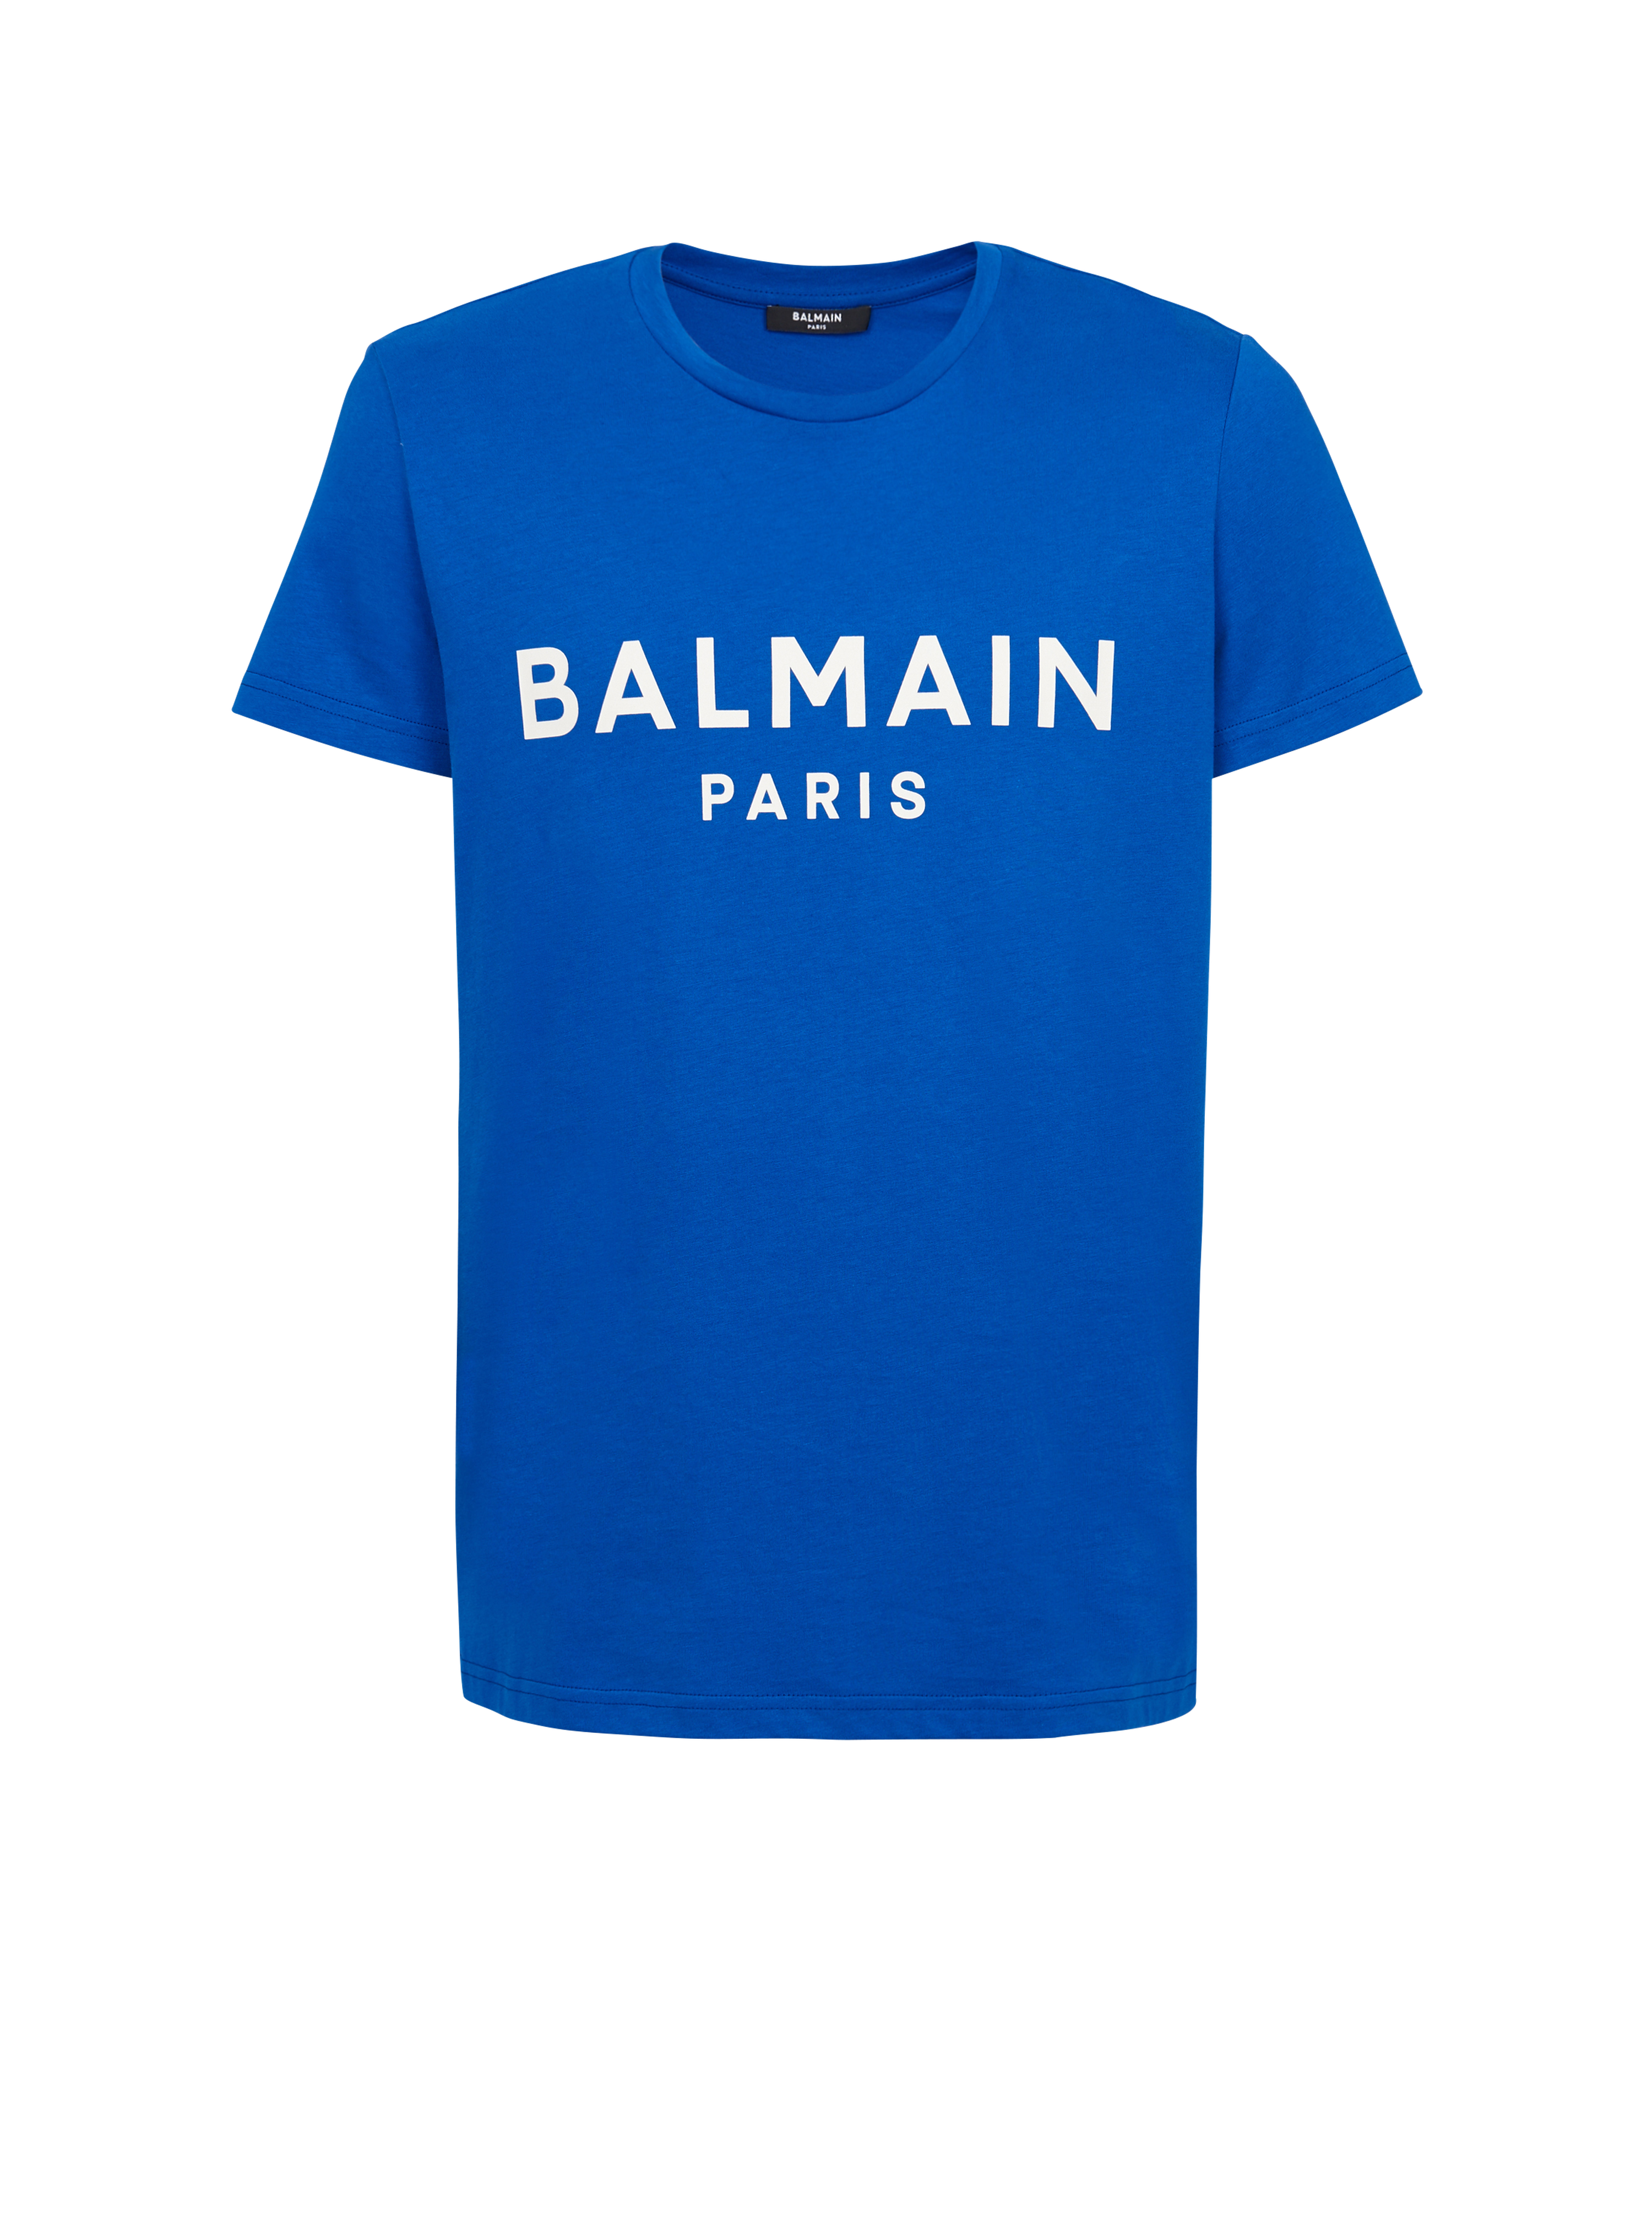 Balmain巴尔曼标志印花环保设计棉质T恤, blue